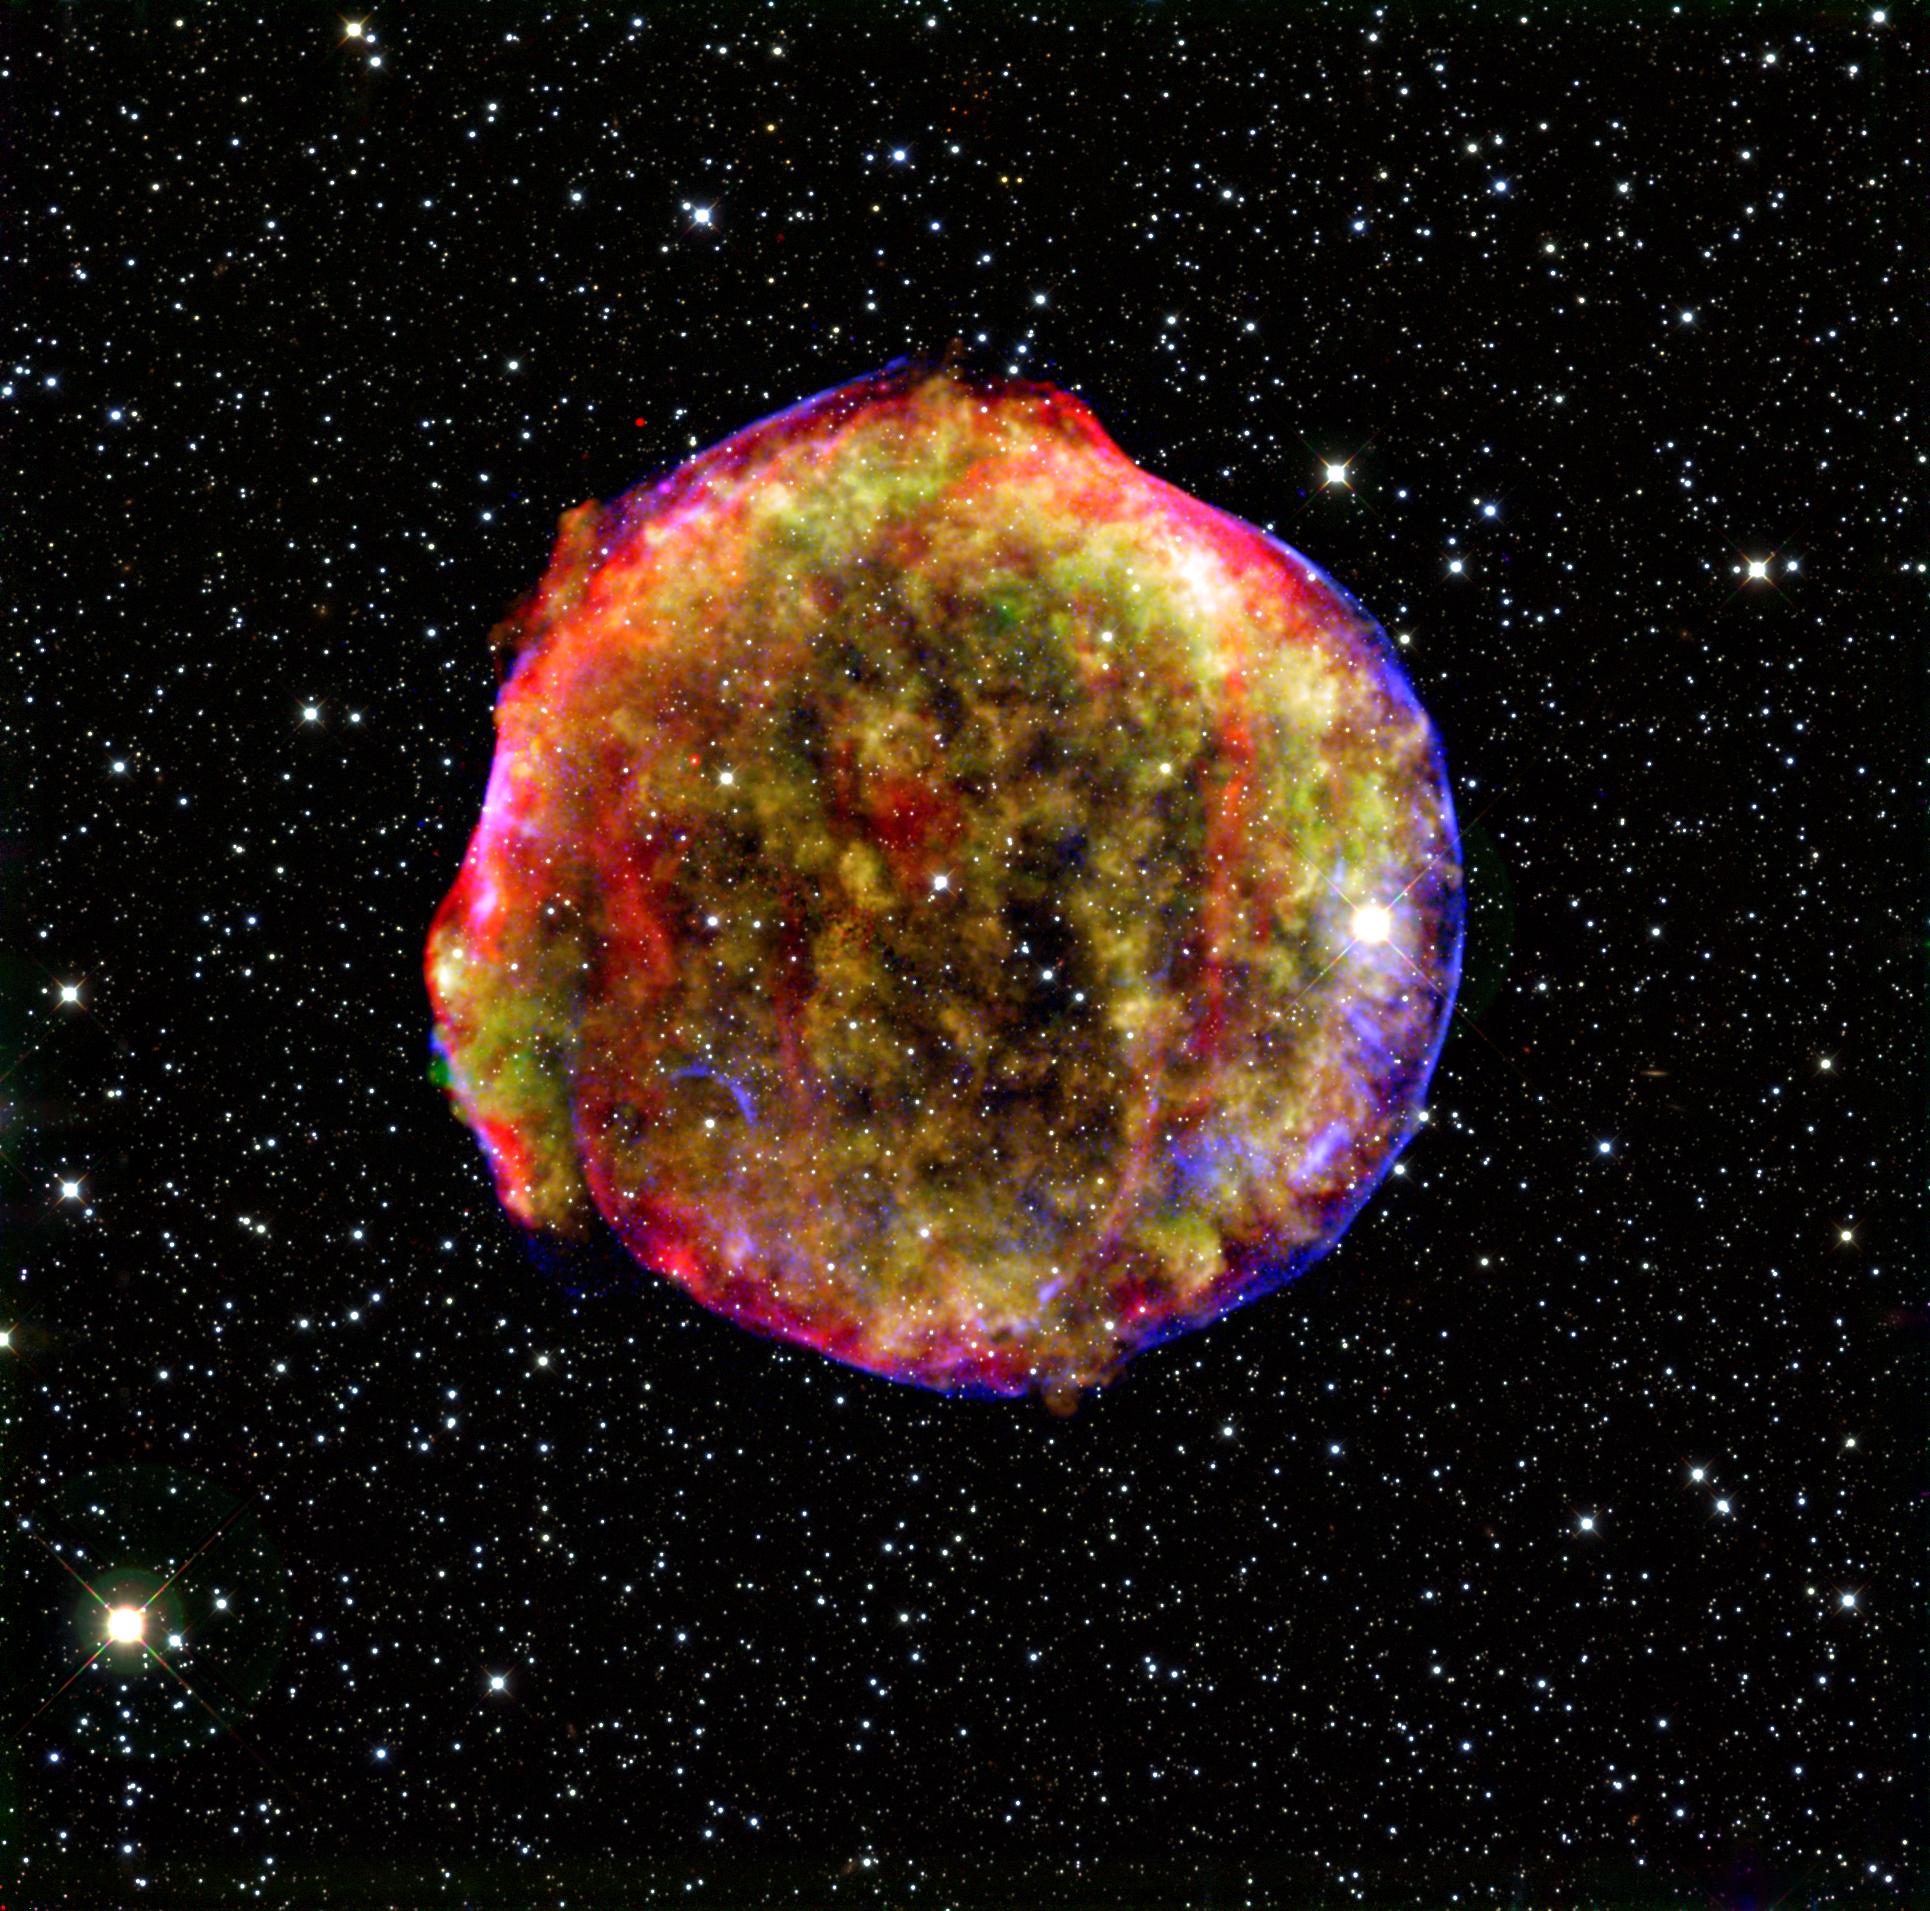 Remanente de la supernova Tycho. Imagen: NASA/MPIA/Calar Alto Observatory, Oliver Krause et al. Fuente: Wikipedia.